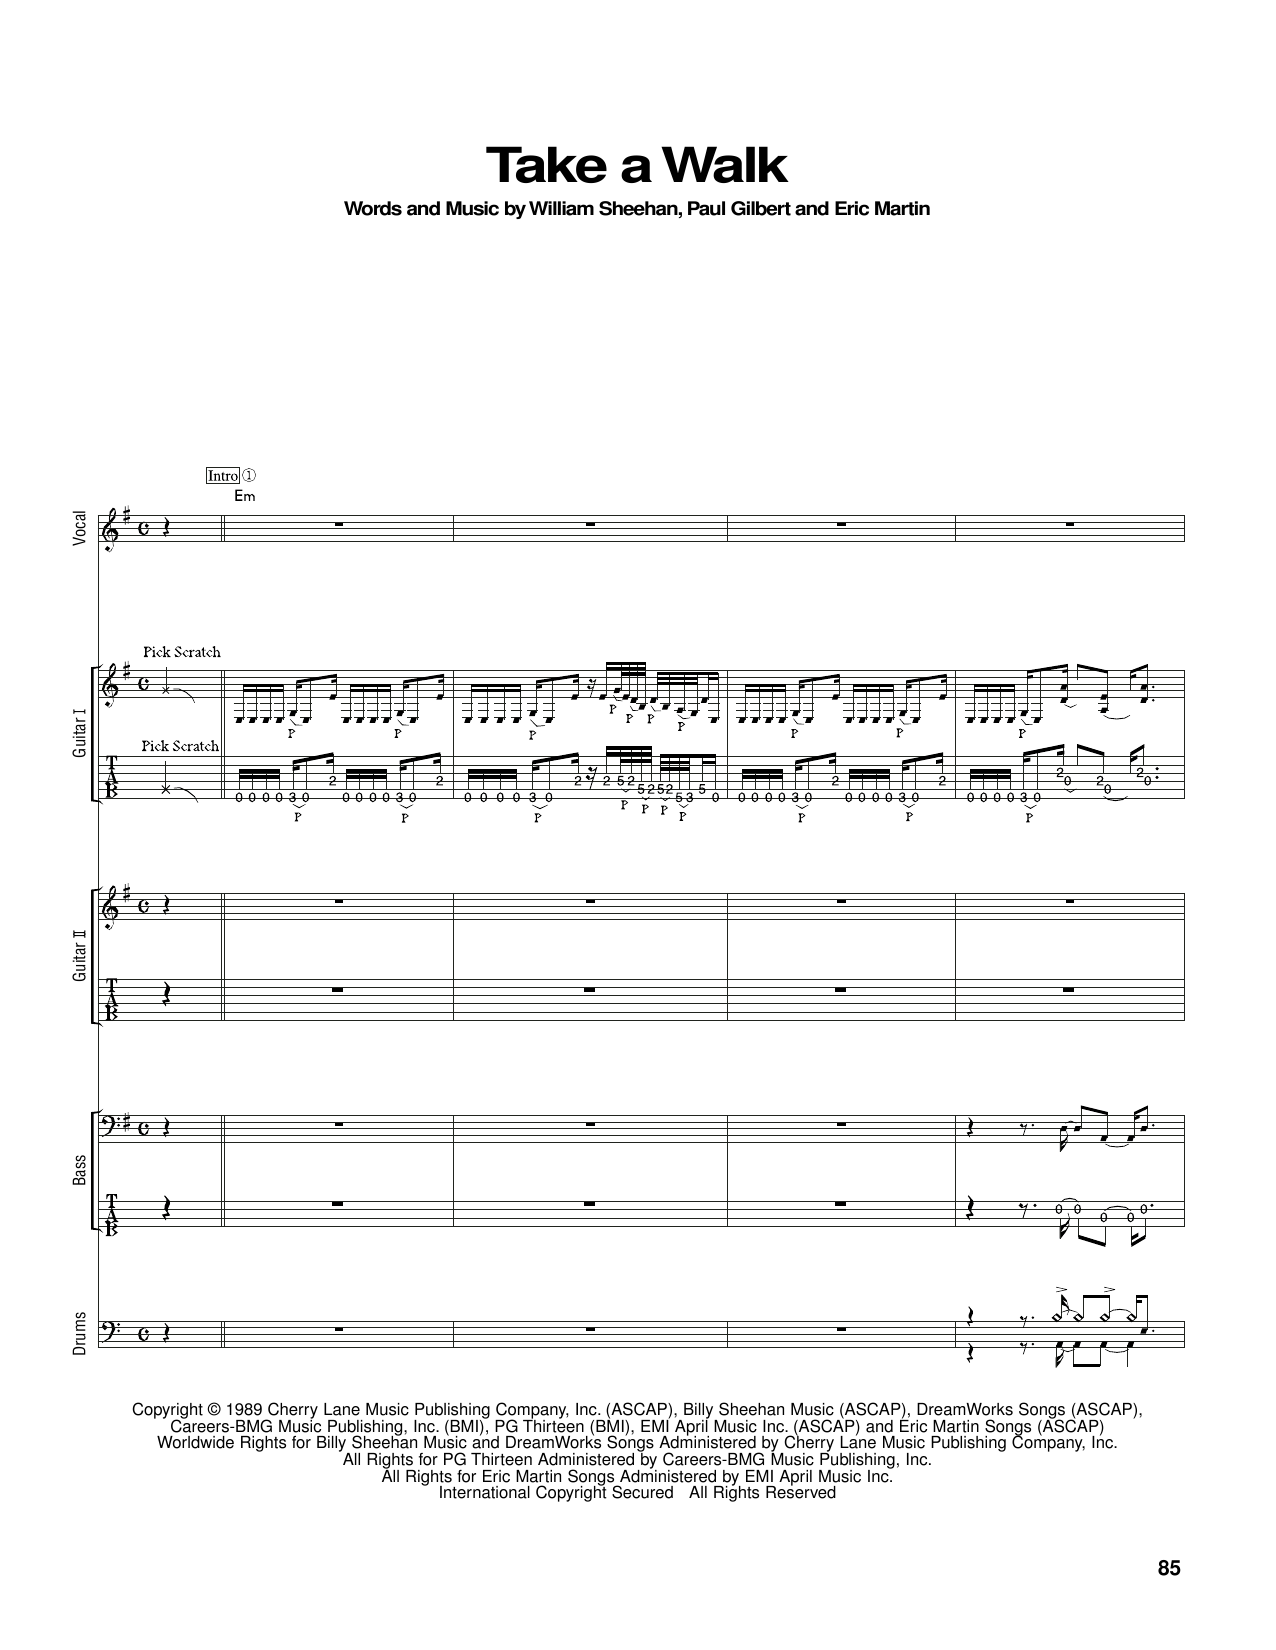 Mr. Big Take A Walk Sheet Music Notes & Chords for Guitar Tab - Download or Print PDF